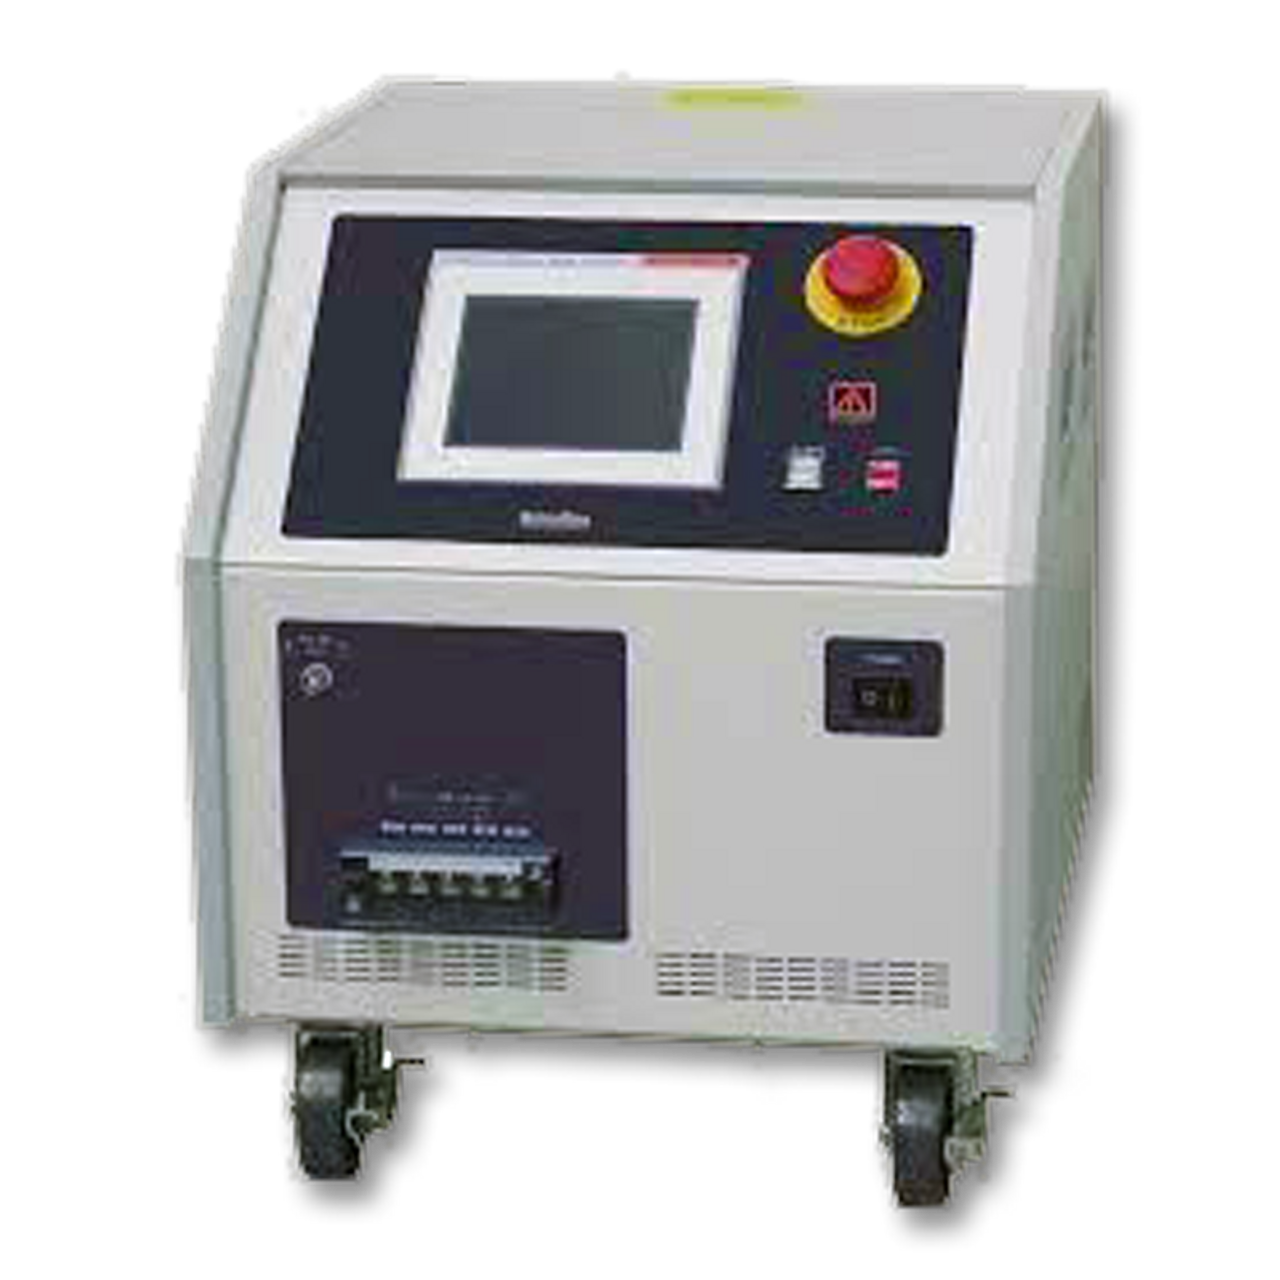 NoiseKen SWCS-900-1M Damped Oscillatory Wave Tester for IEC 61000-4-18 Immunity